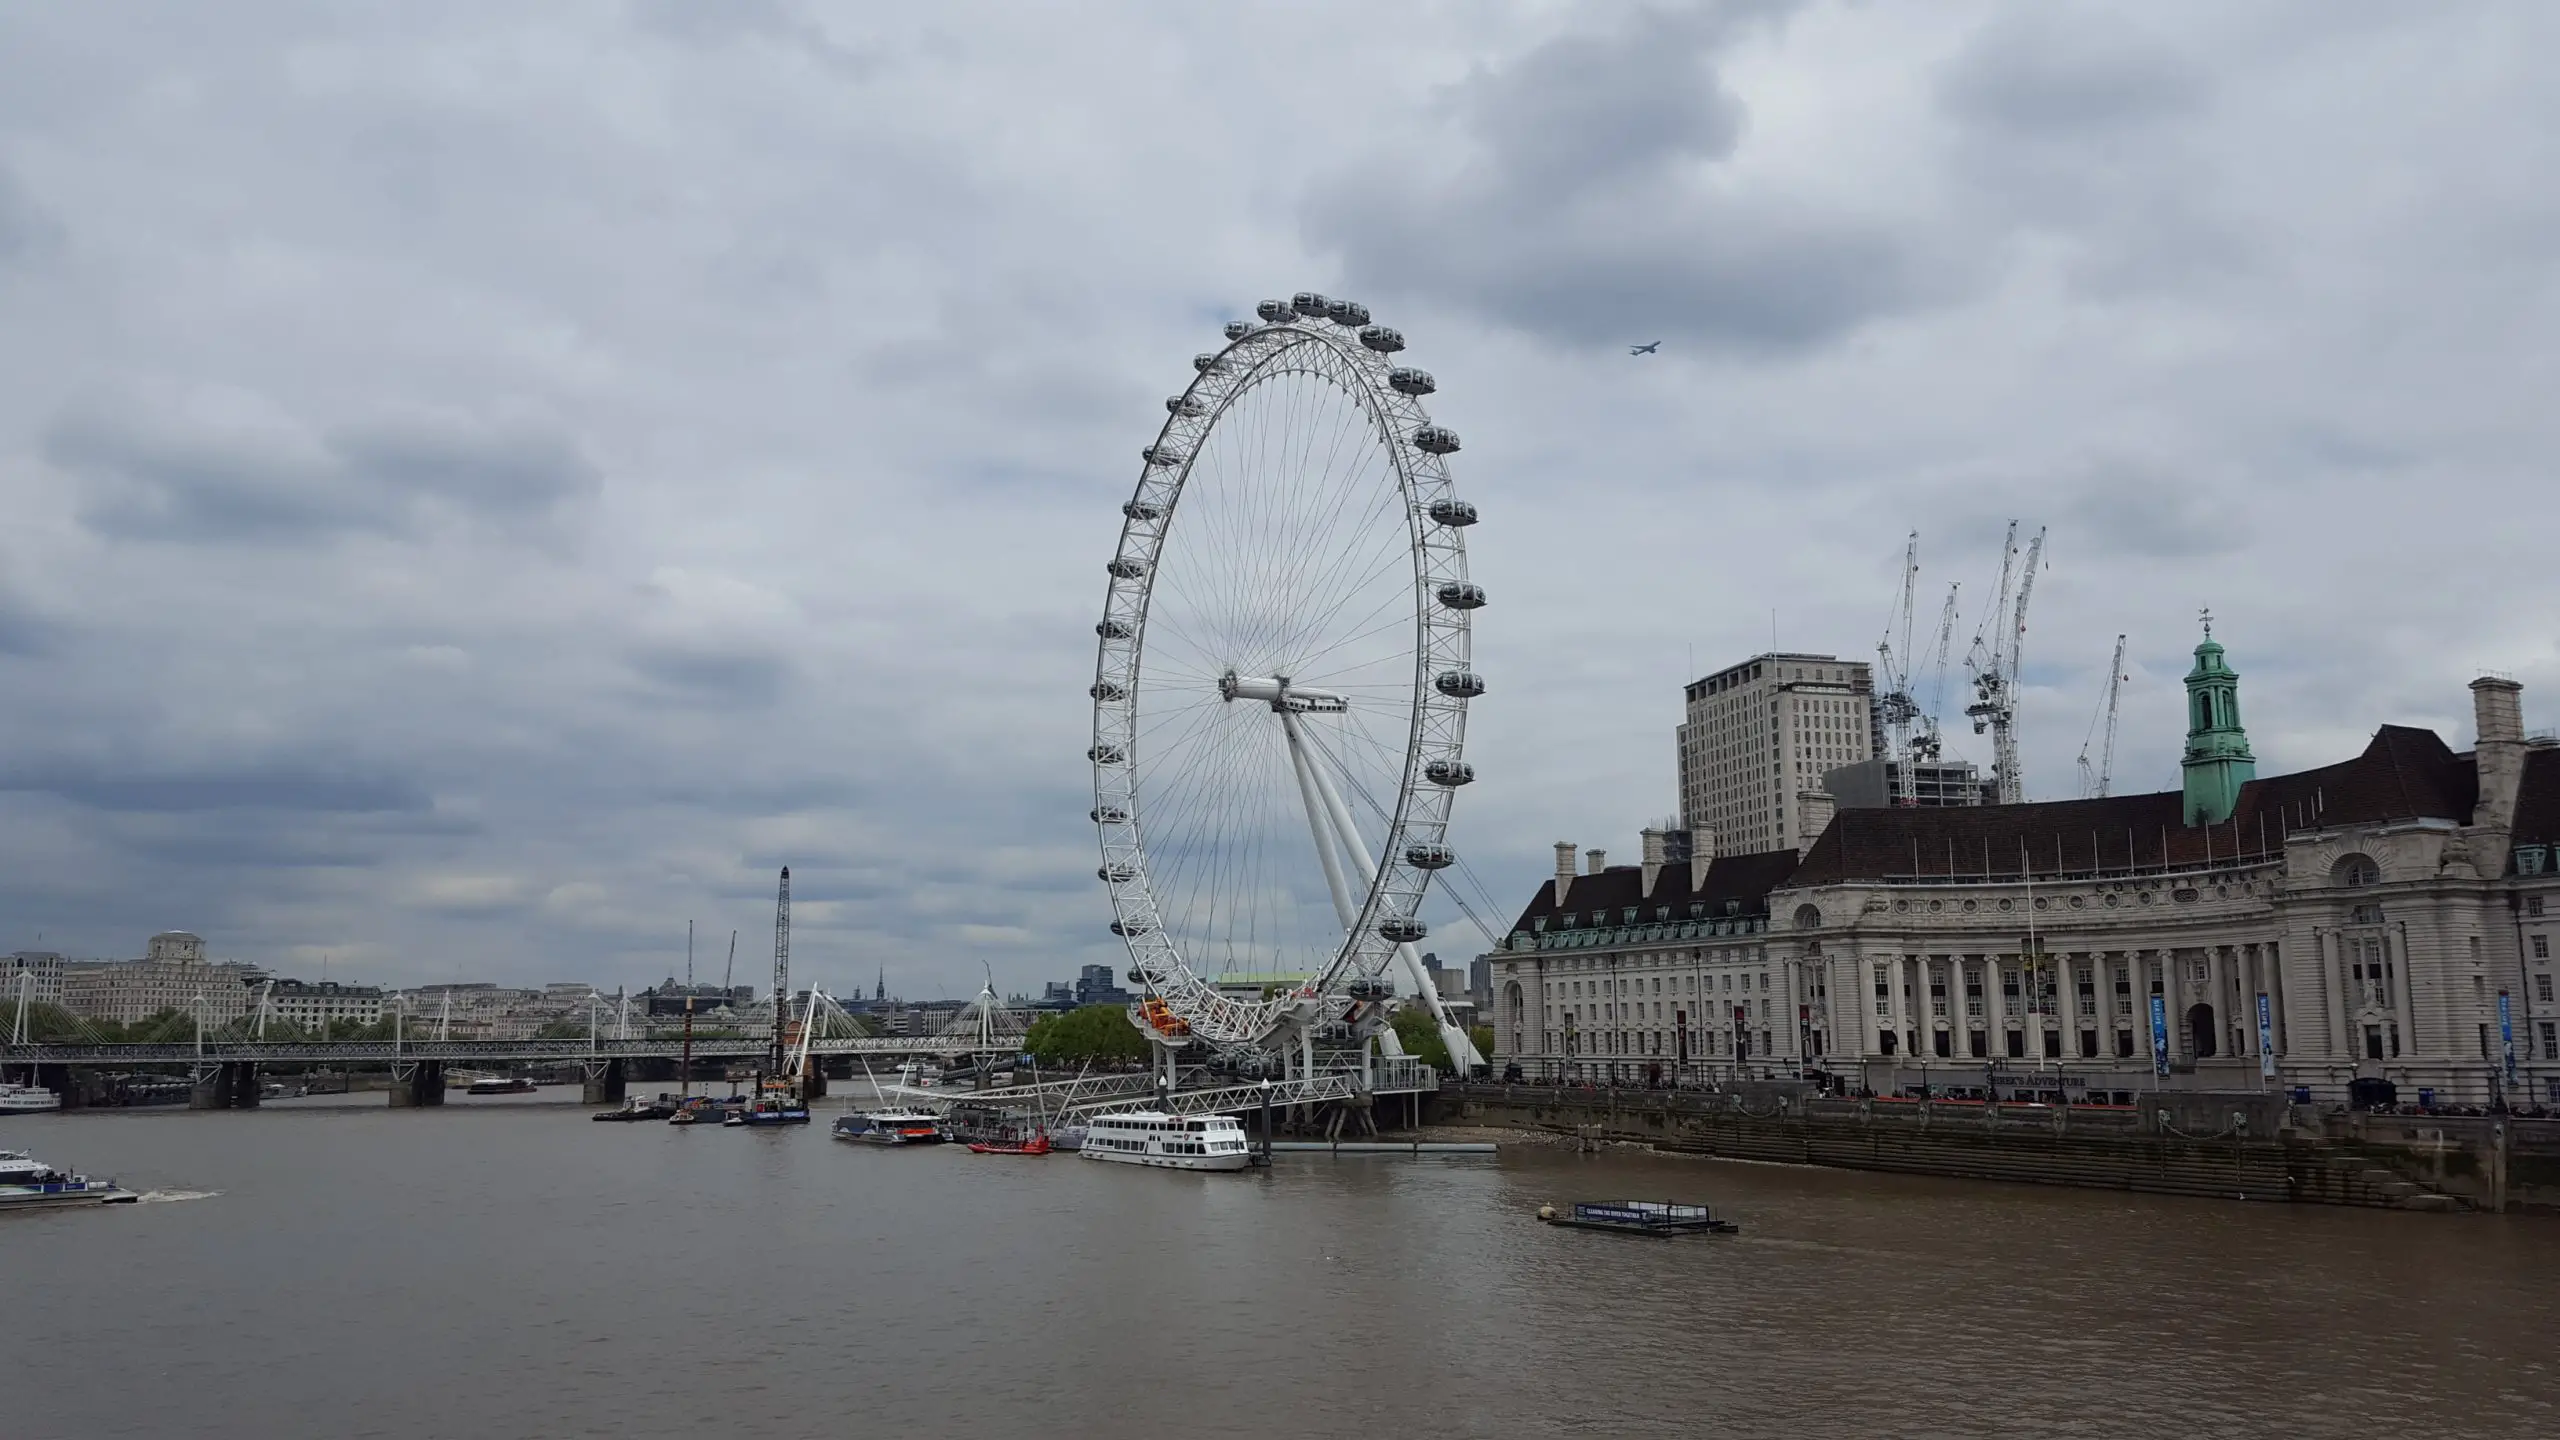 Famous landmarks in London